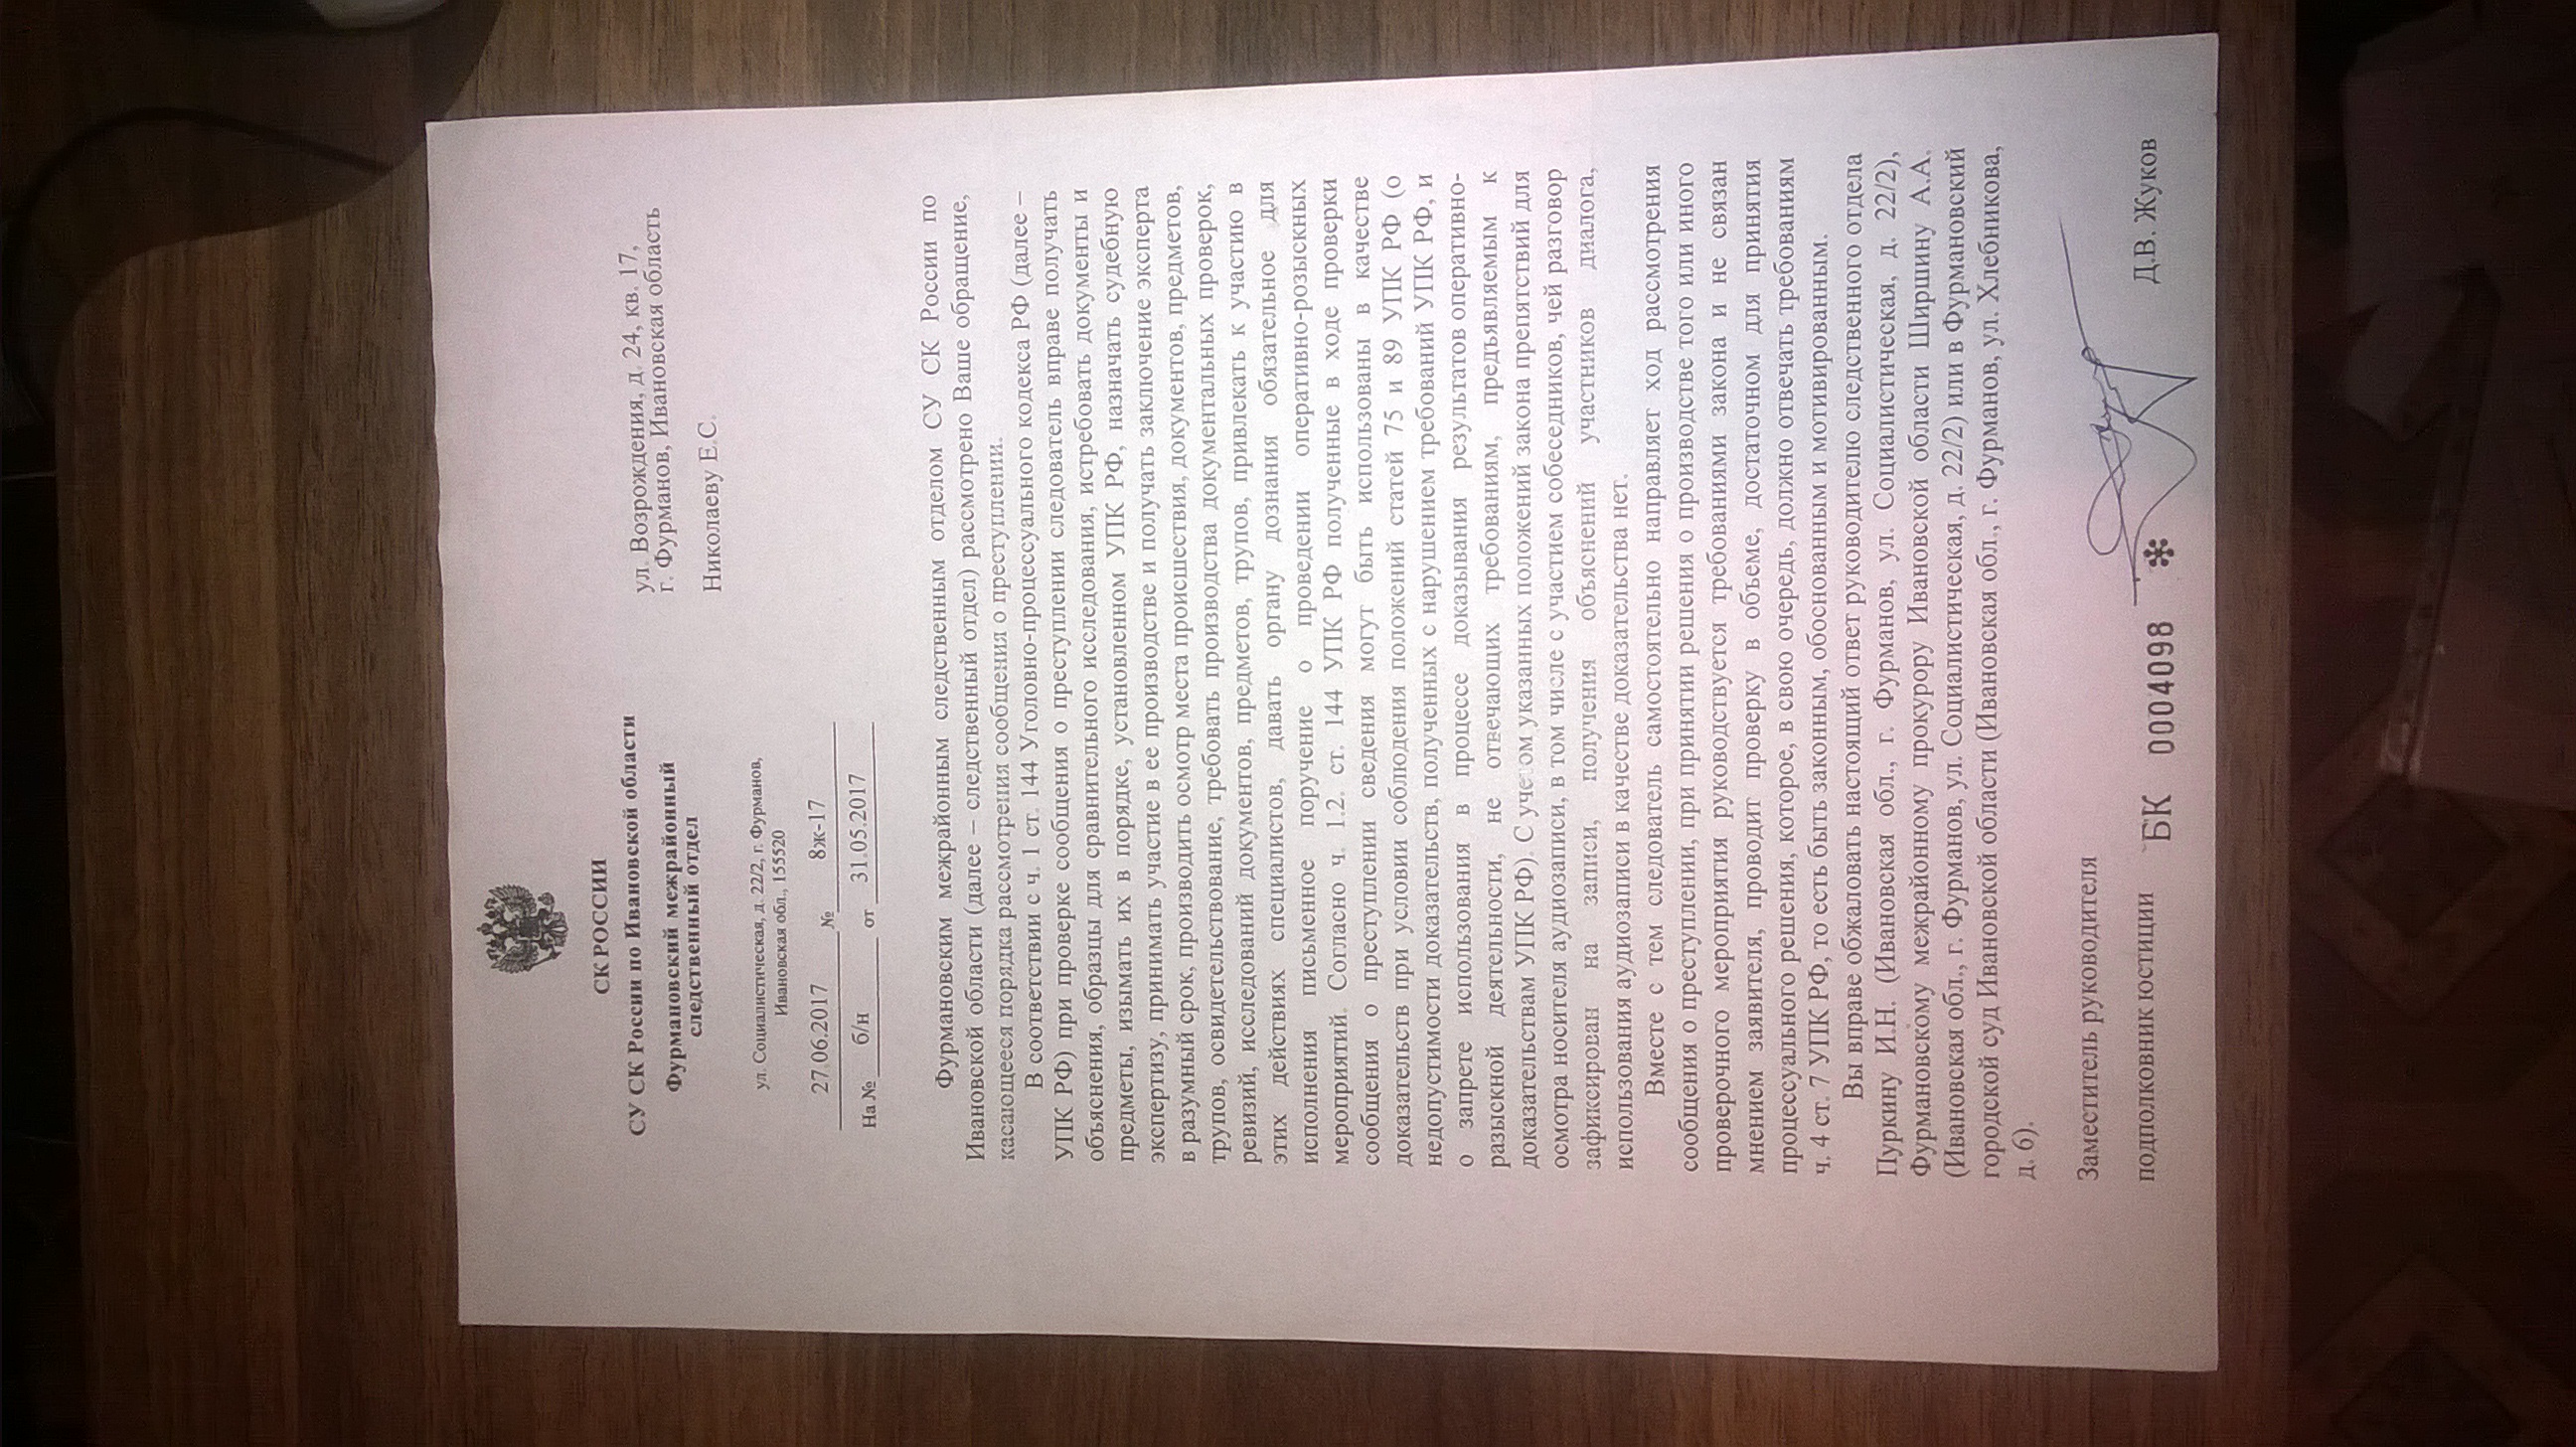 Ответ Фурмановского СО СУ СК(ID документа 276) (Дата документа 27.06.2017) Страница 1